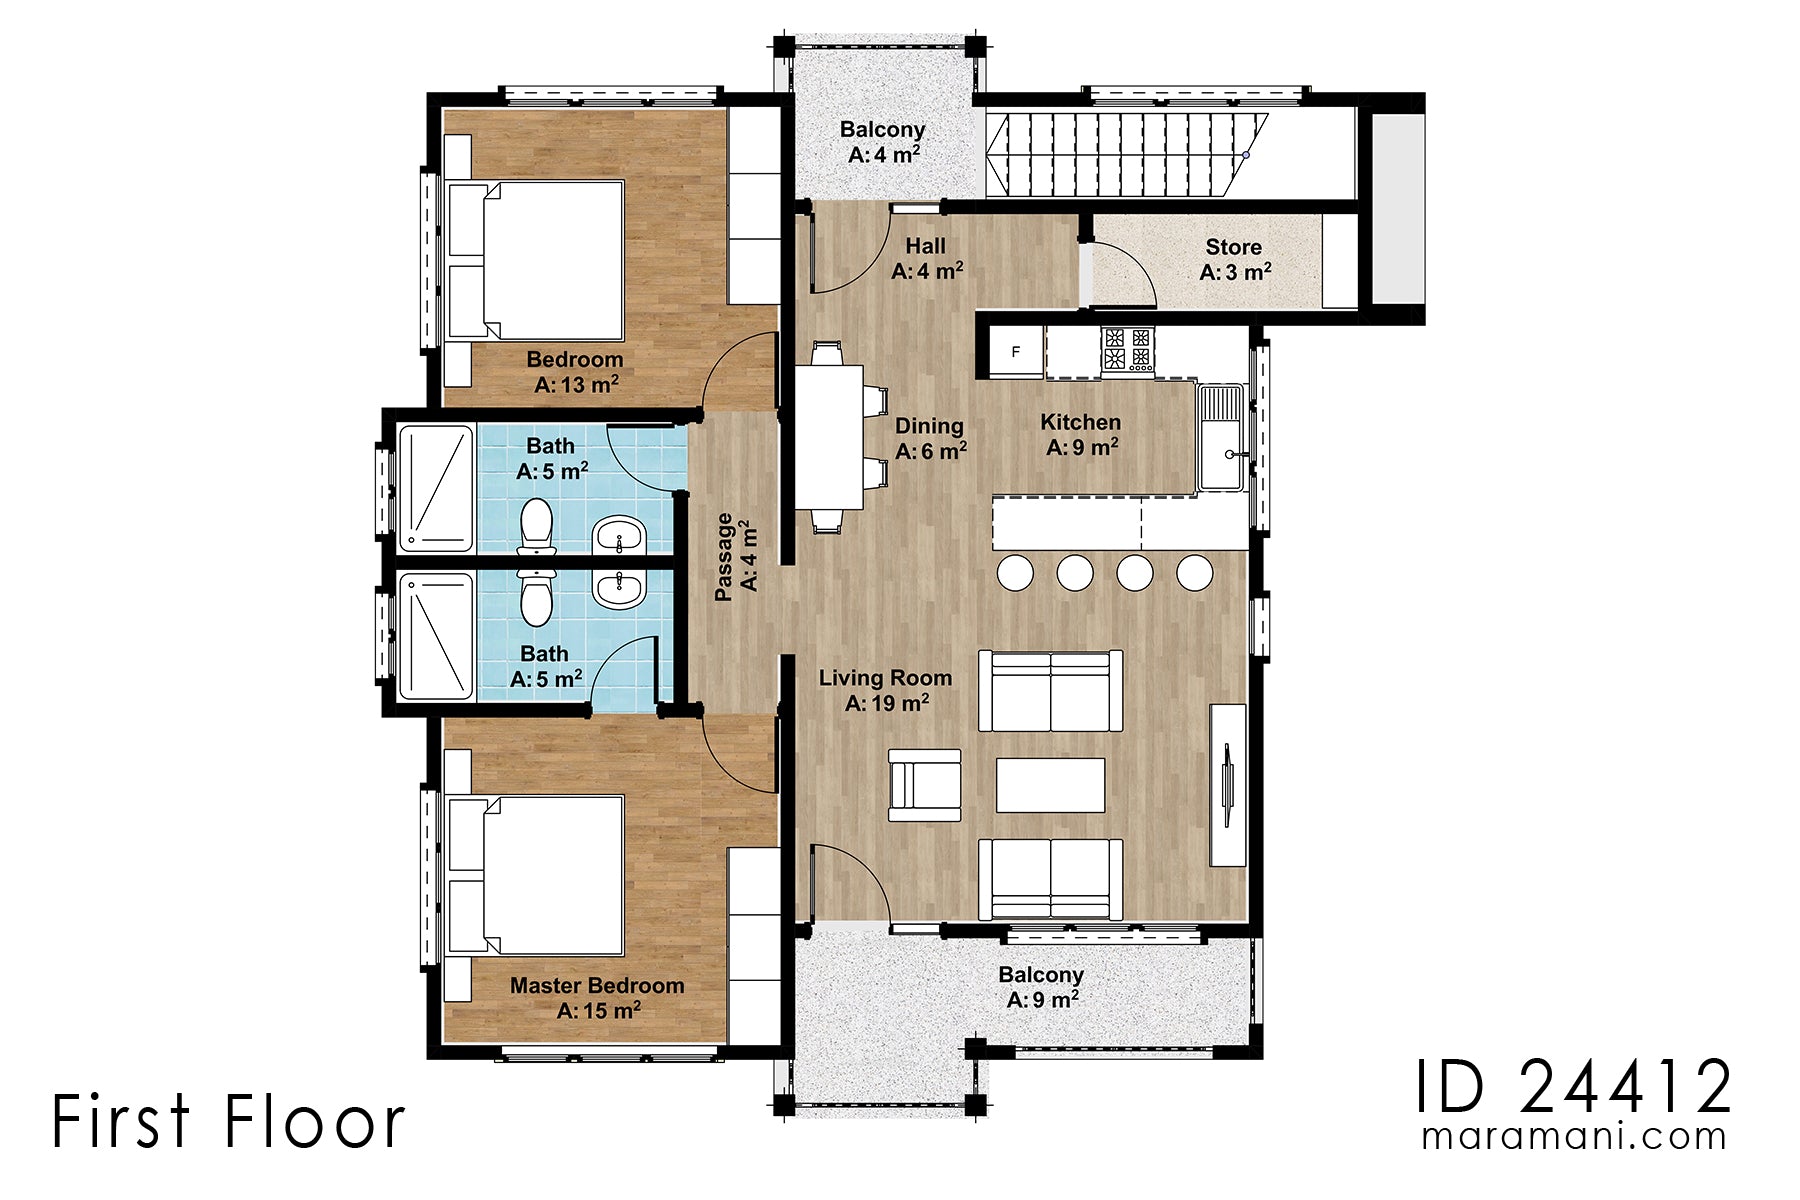 Duplex 2 bedroom apartment - ID 24412